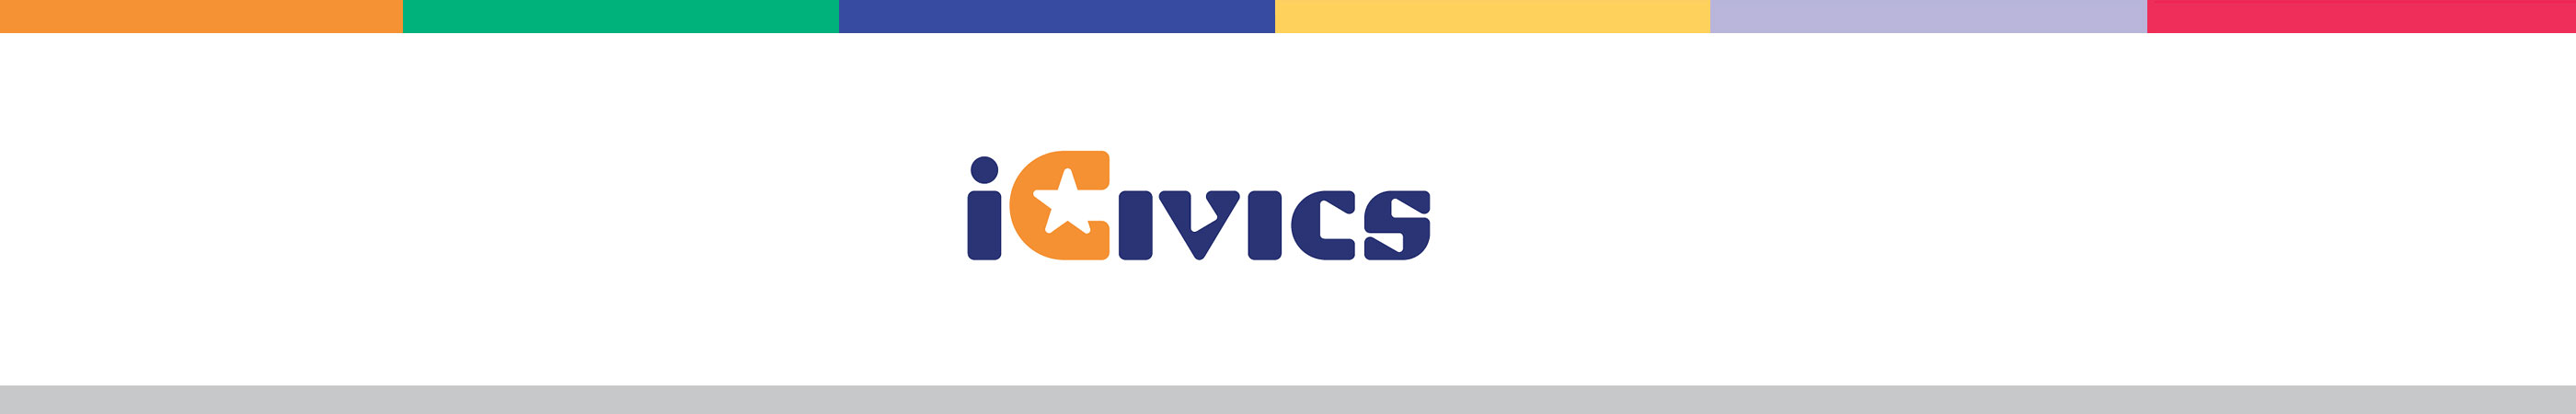 iCivics banner